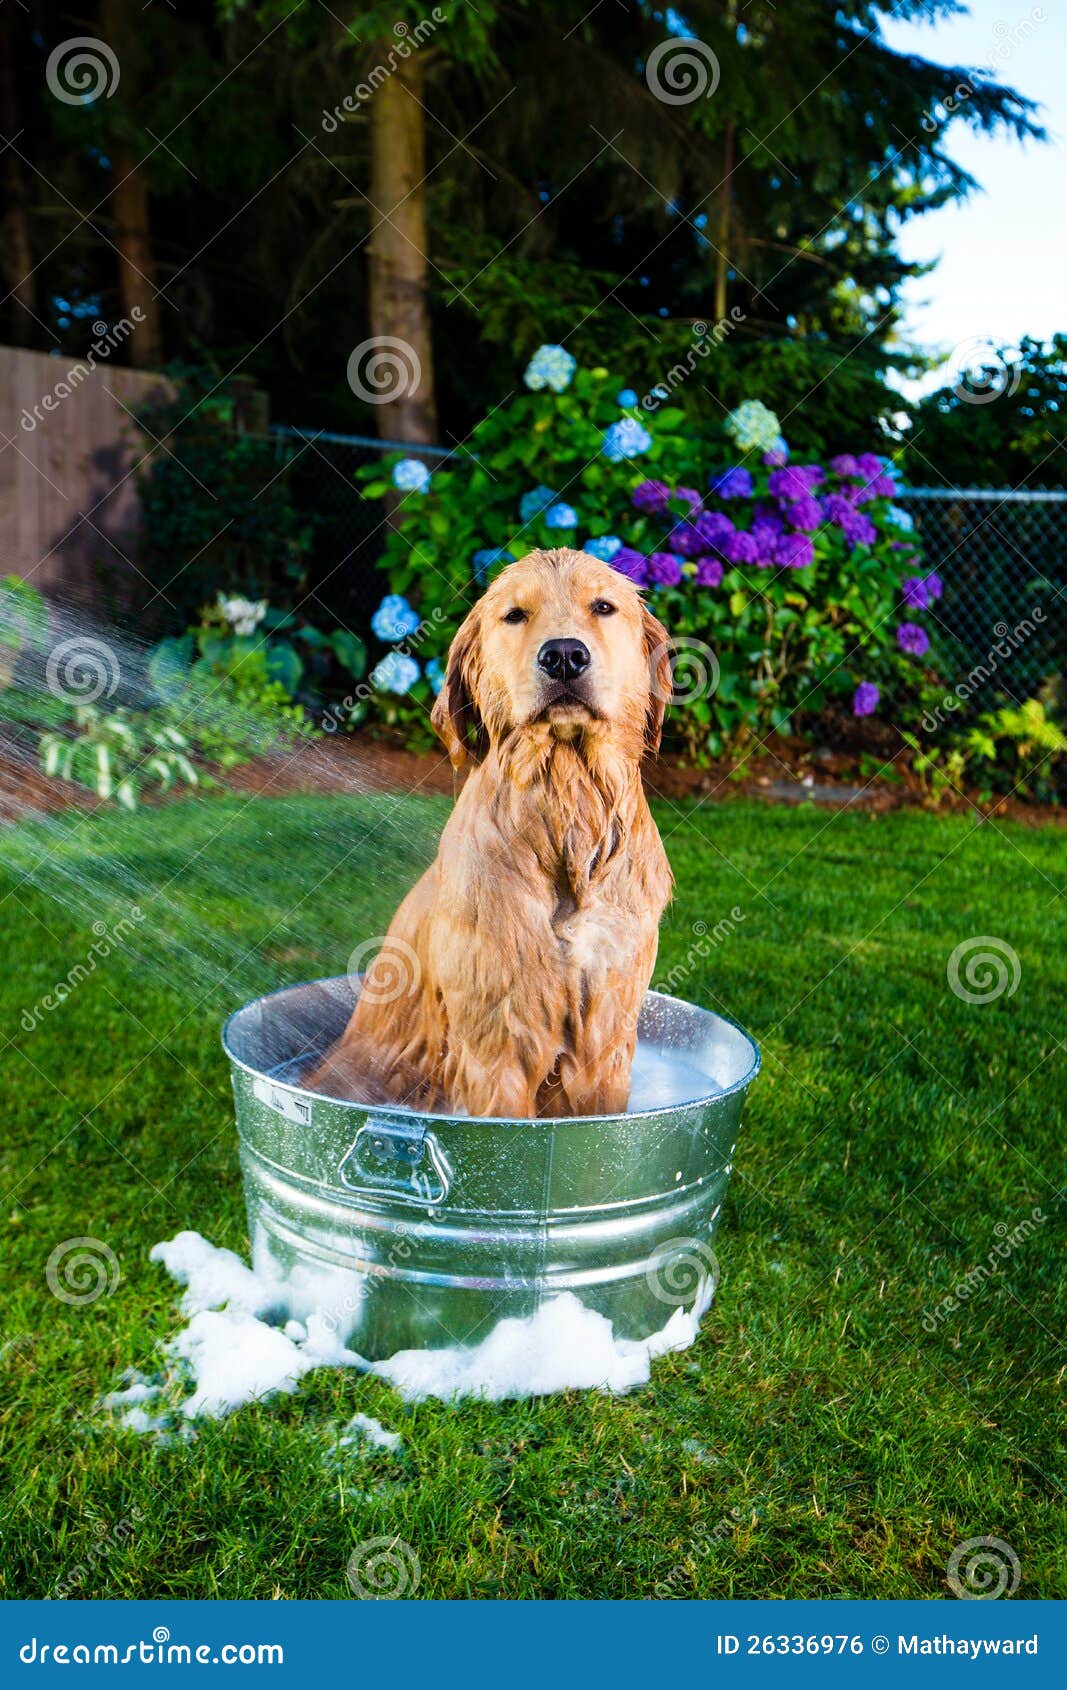 Dog shower stock photo. Image of retriever, lawn, grass - 26336976